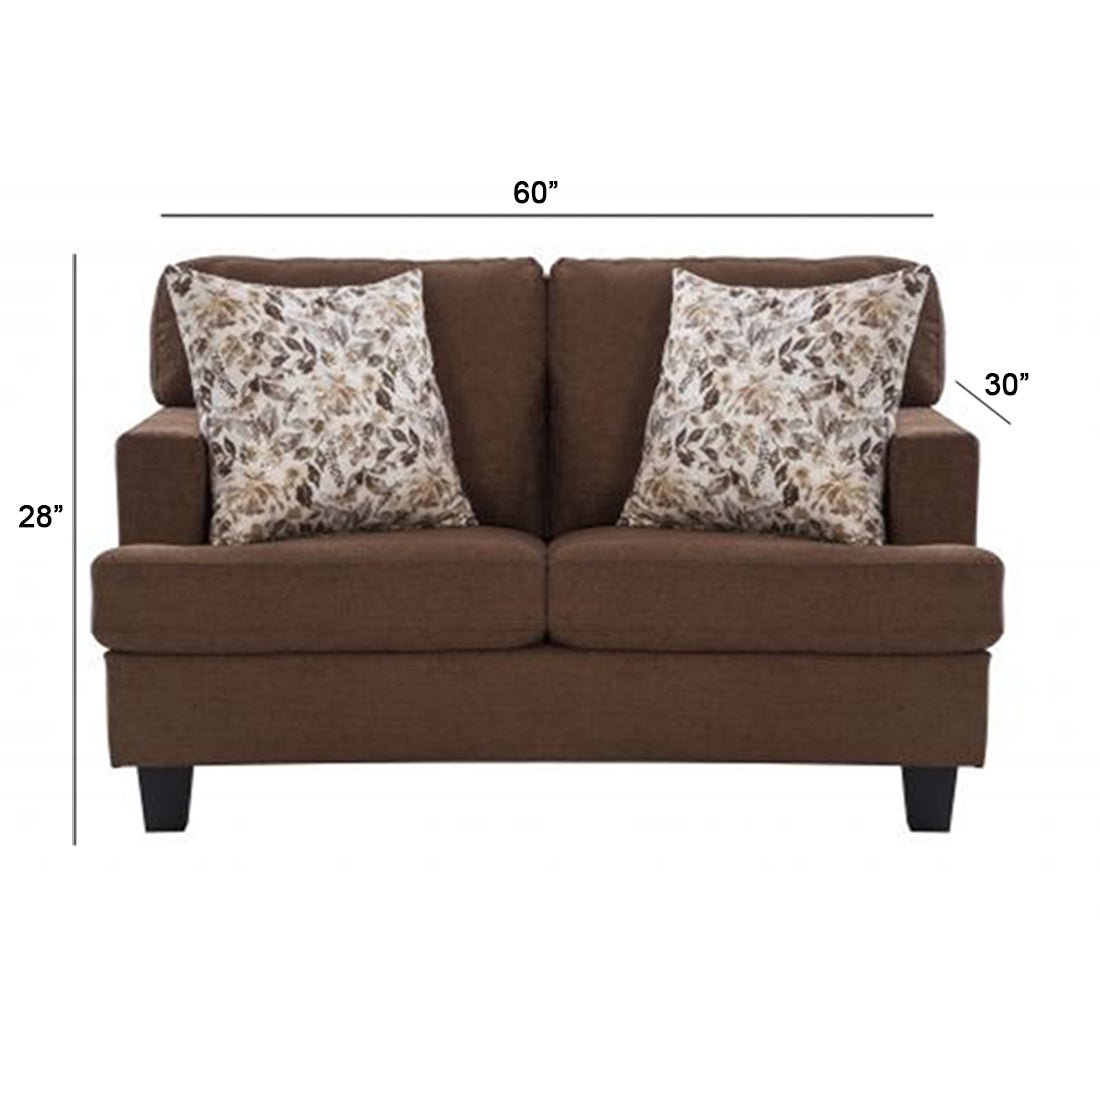 Torque India Apricot 2 Seater Fabric Sofa For Living Room - Brown | 2 Seater Fabric Sofa - Torque India